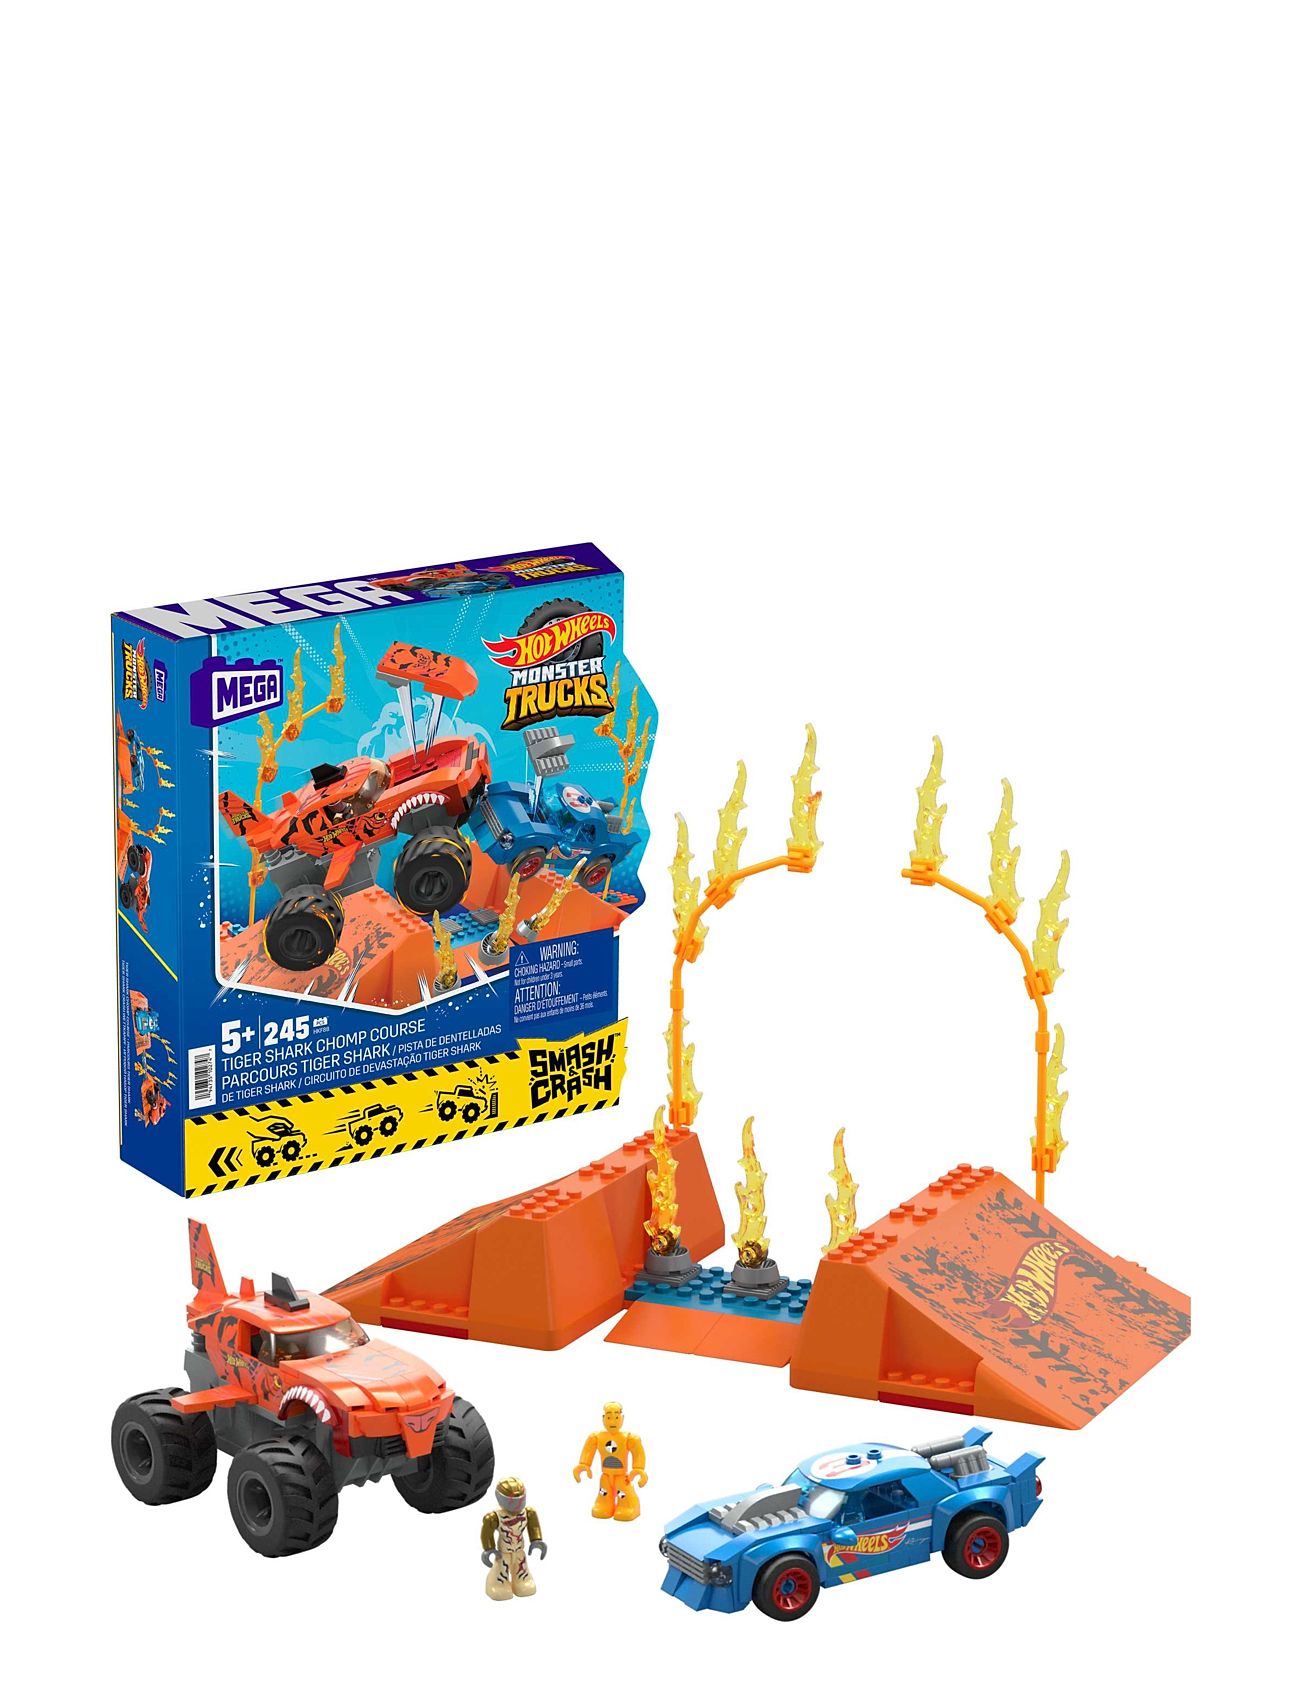 Hot Wheels Smash N Crash Tiger Shark Chomp Course Toys Toy Cars & Vehicles Race Tracks Multi/patterned MEGA Hot Wheels